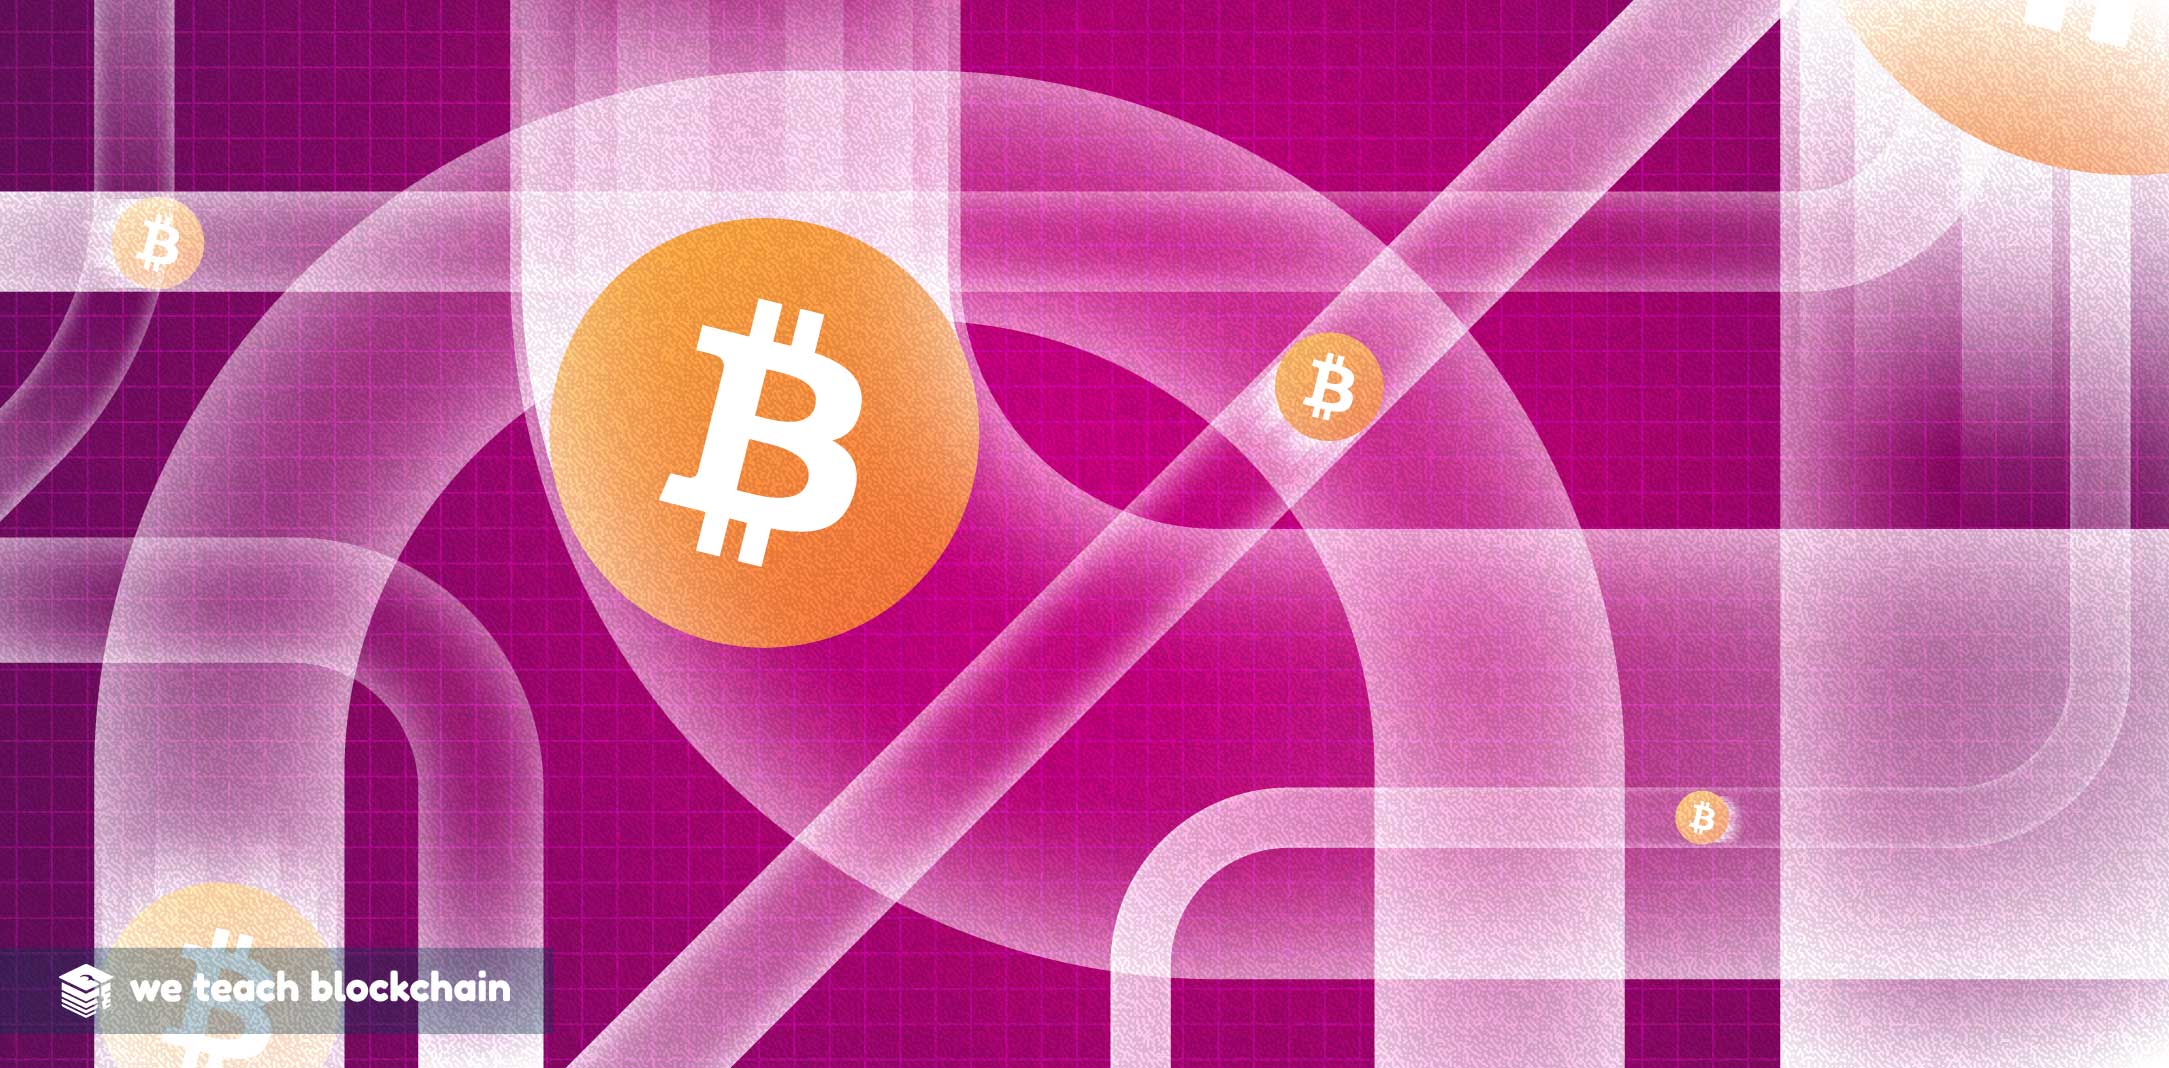 Visualization of bitcoin transactions